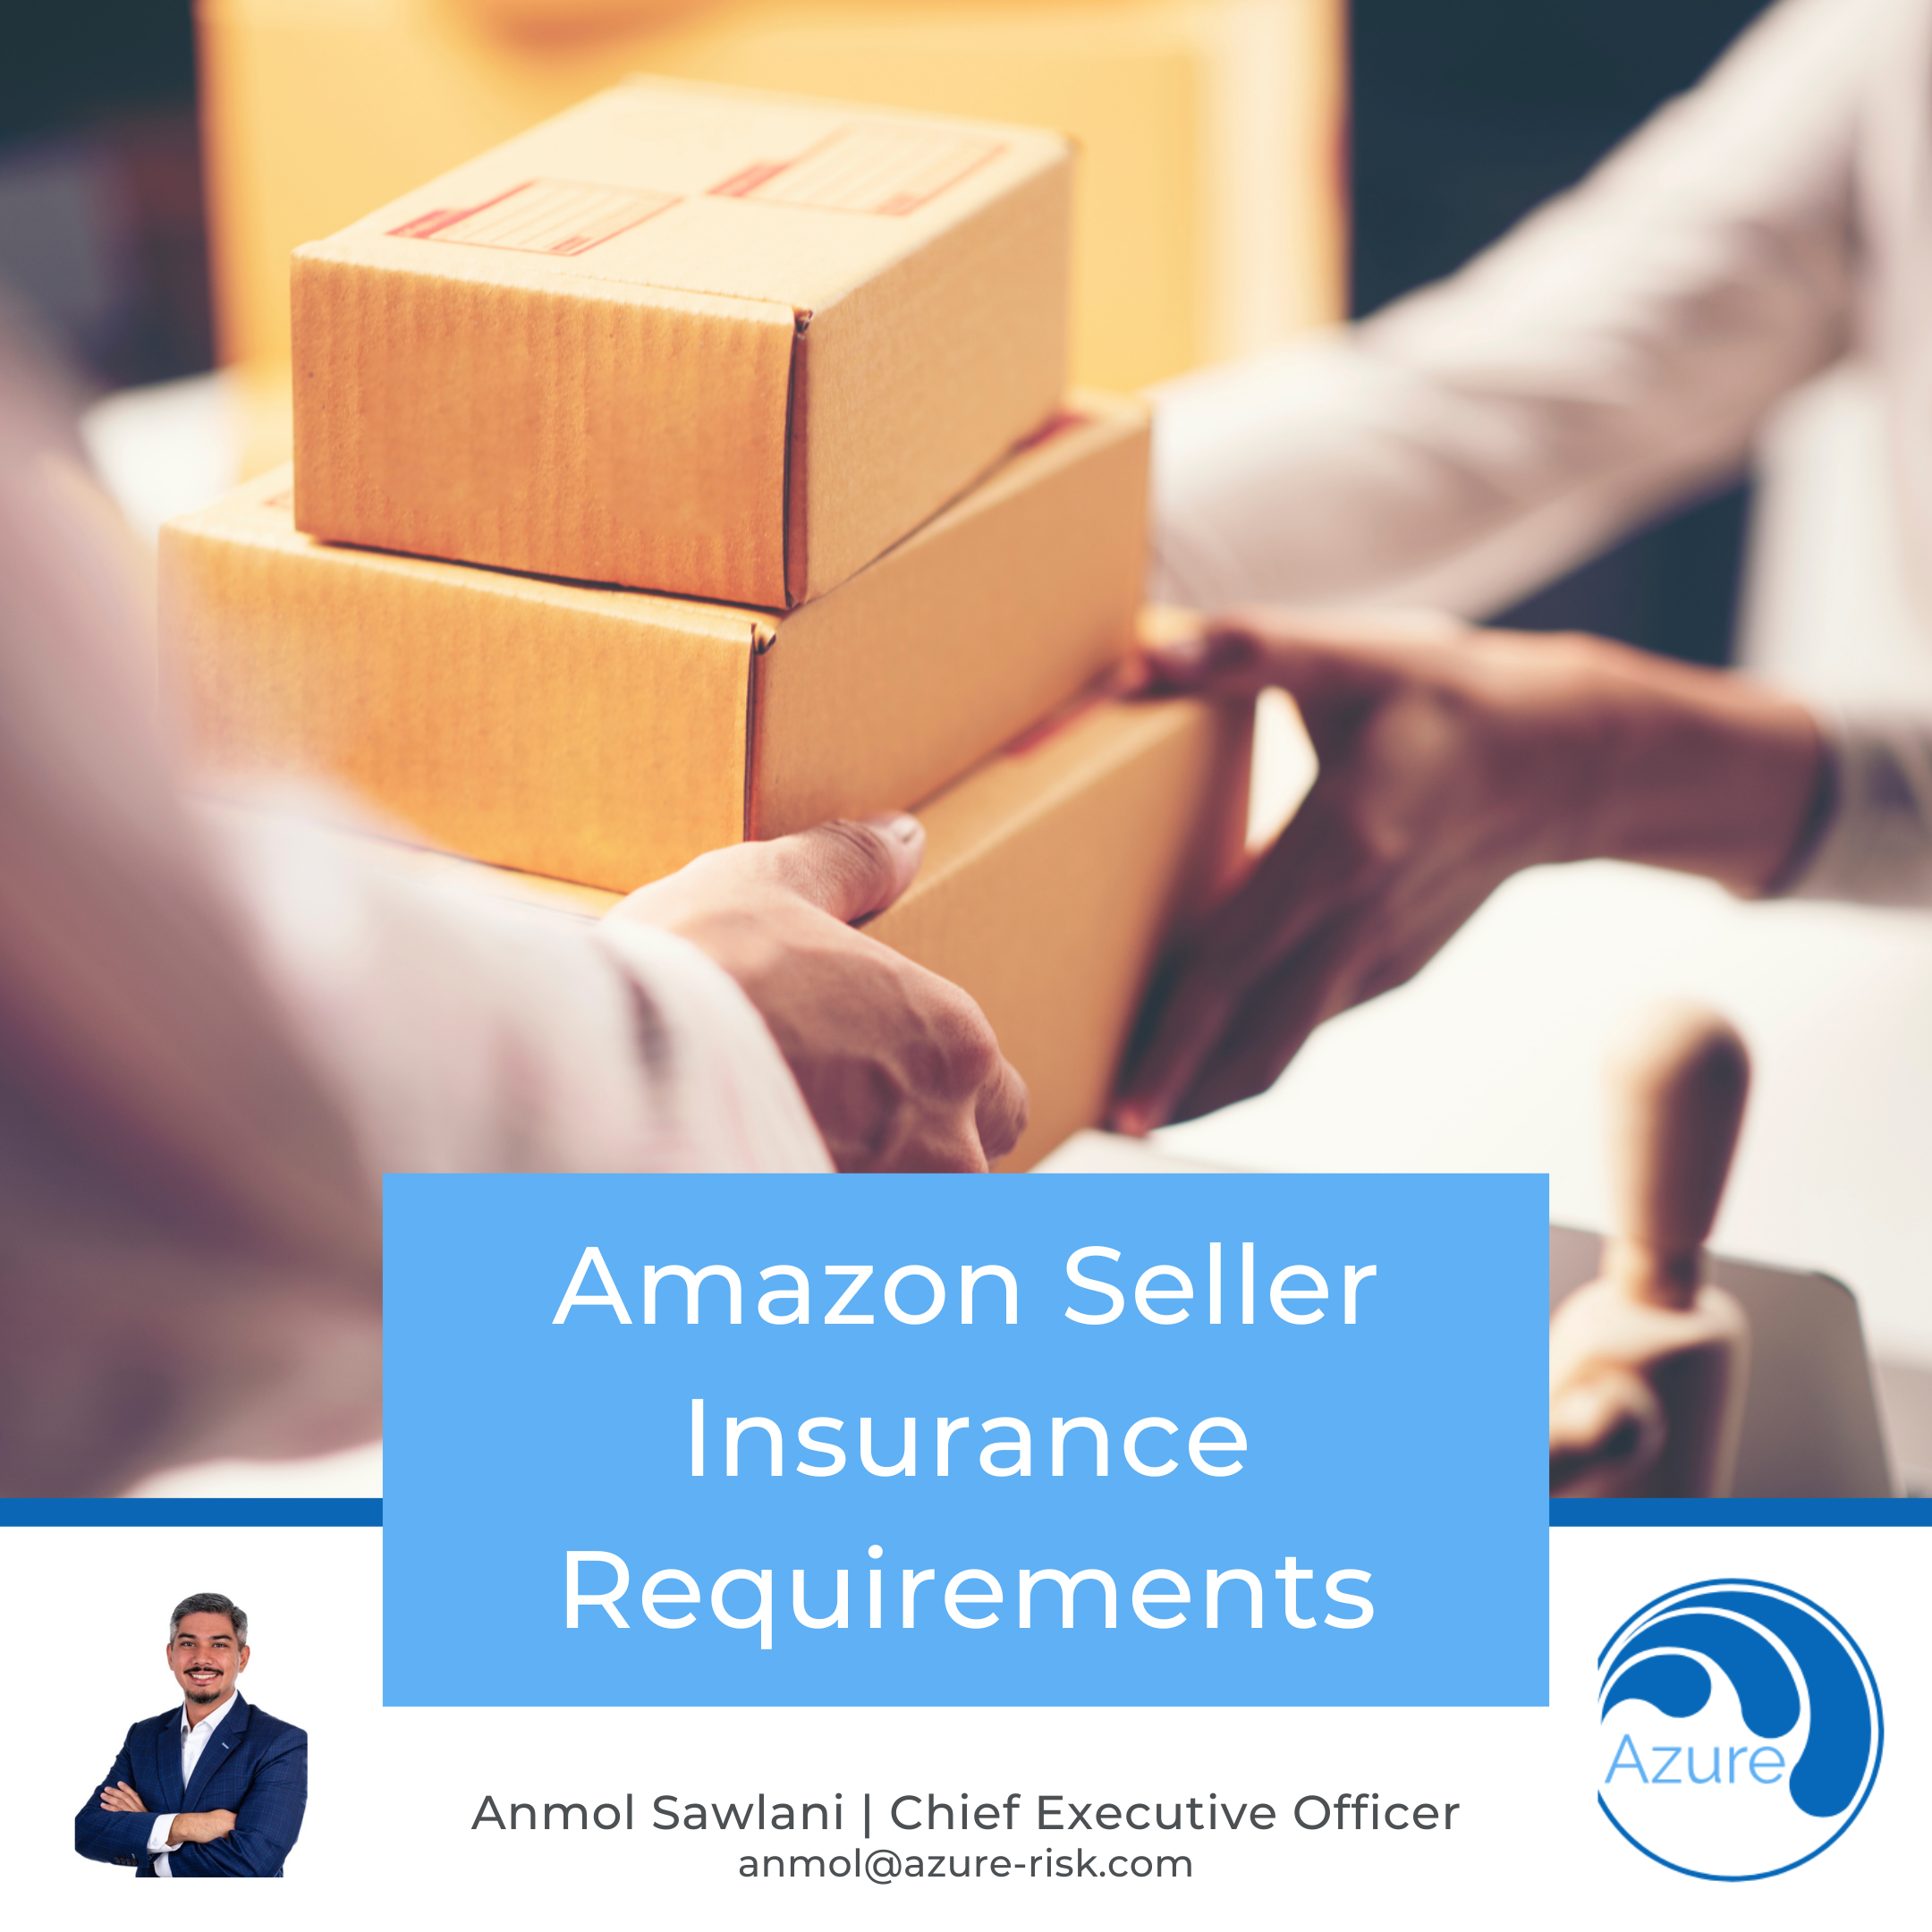 https://azure-risk.com/wp-content/uploads/2022/07/Azure-Risk-Amazon-Seller-Insurance.png